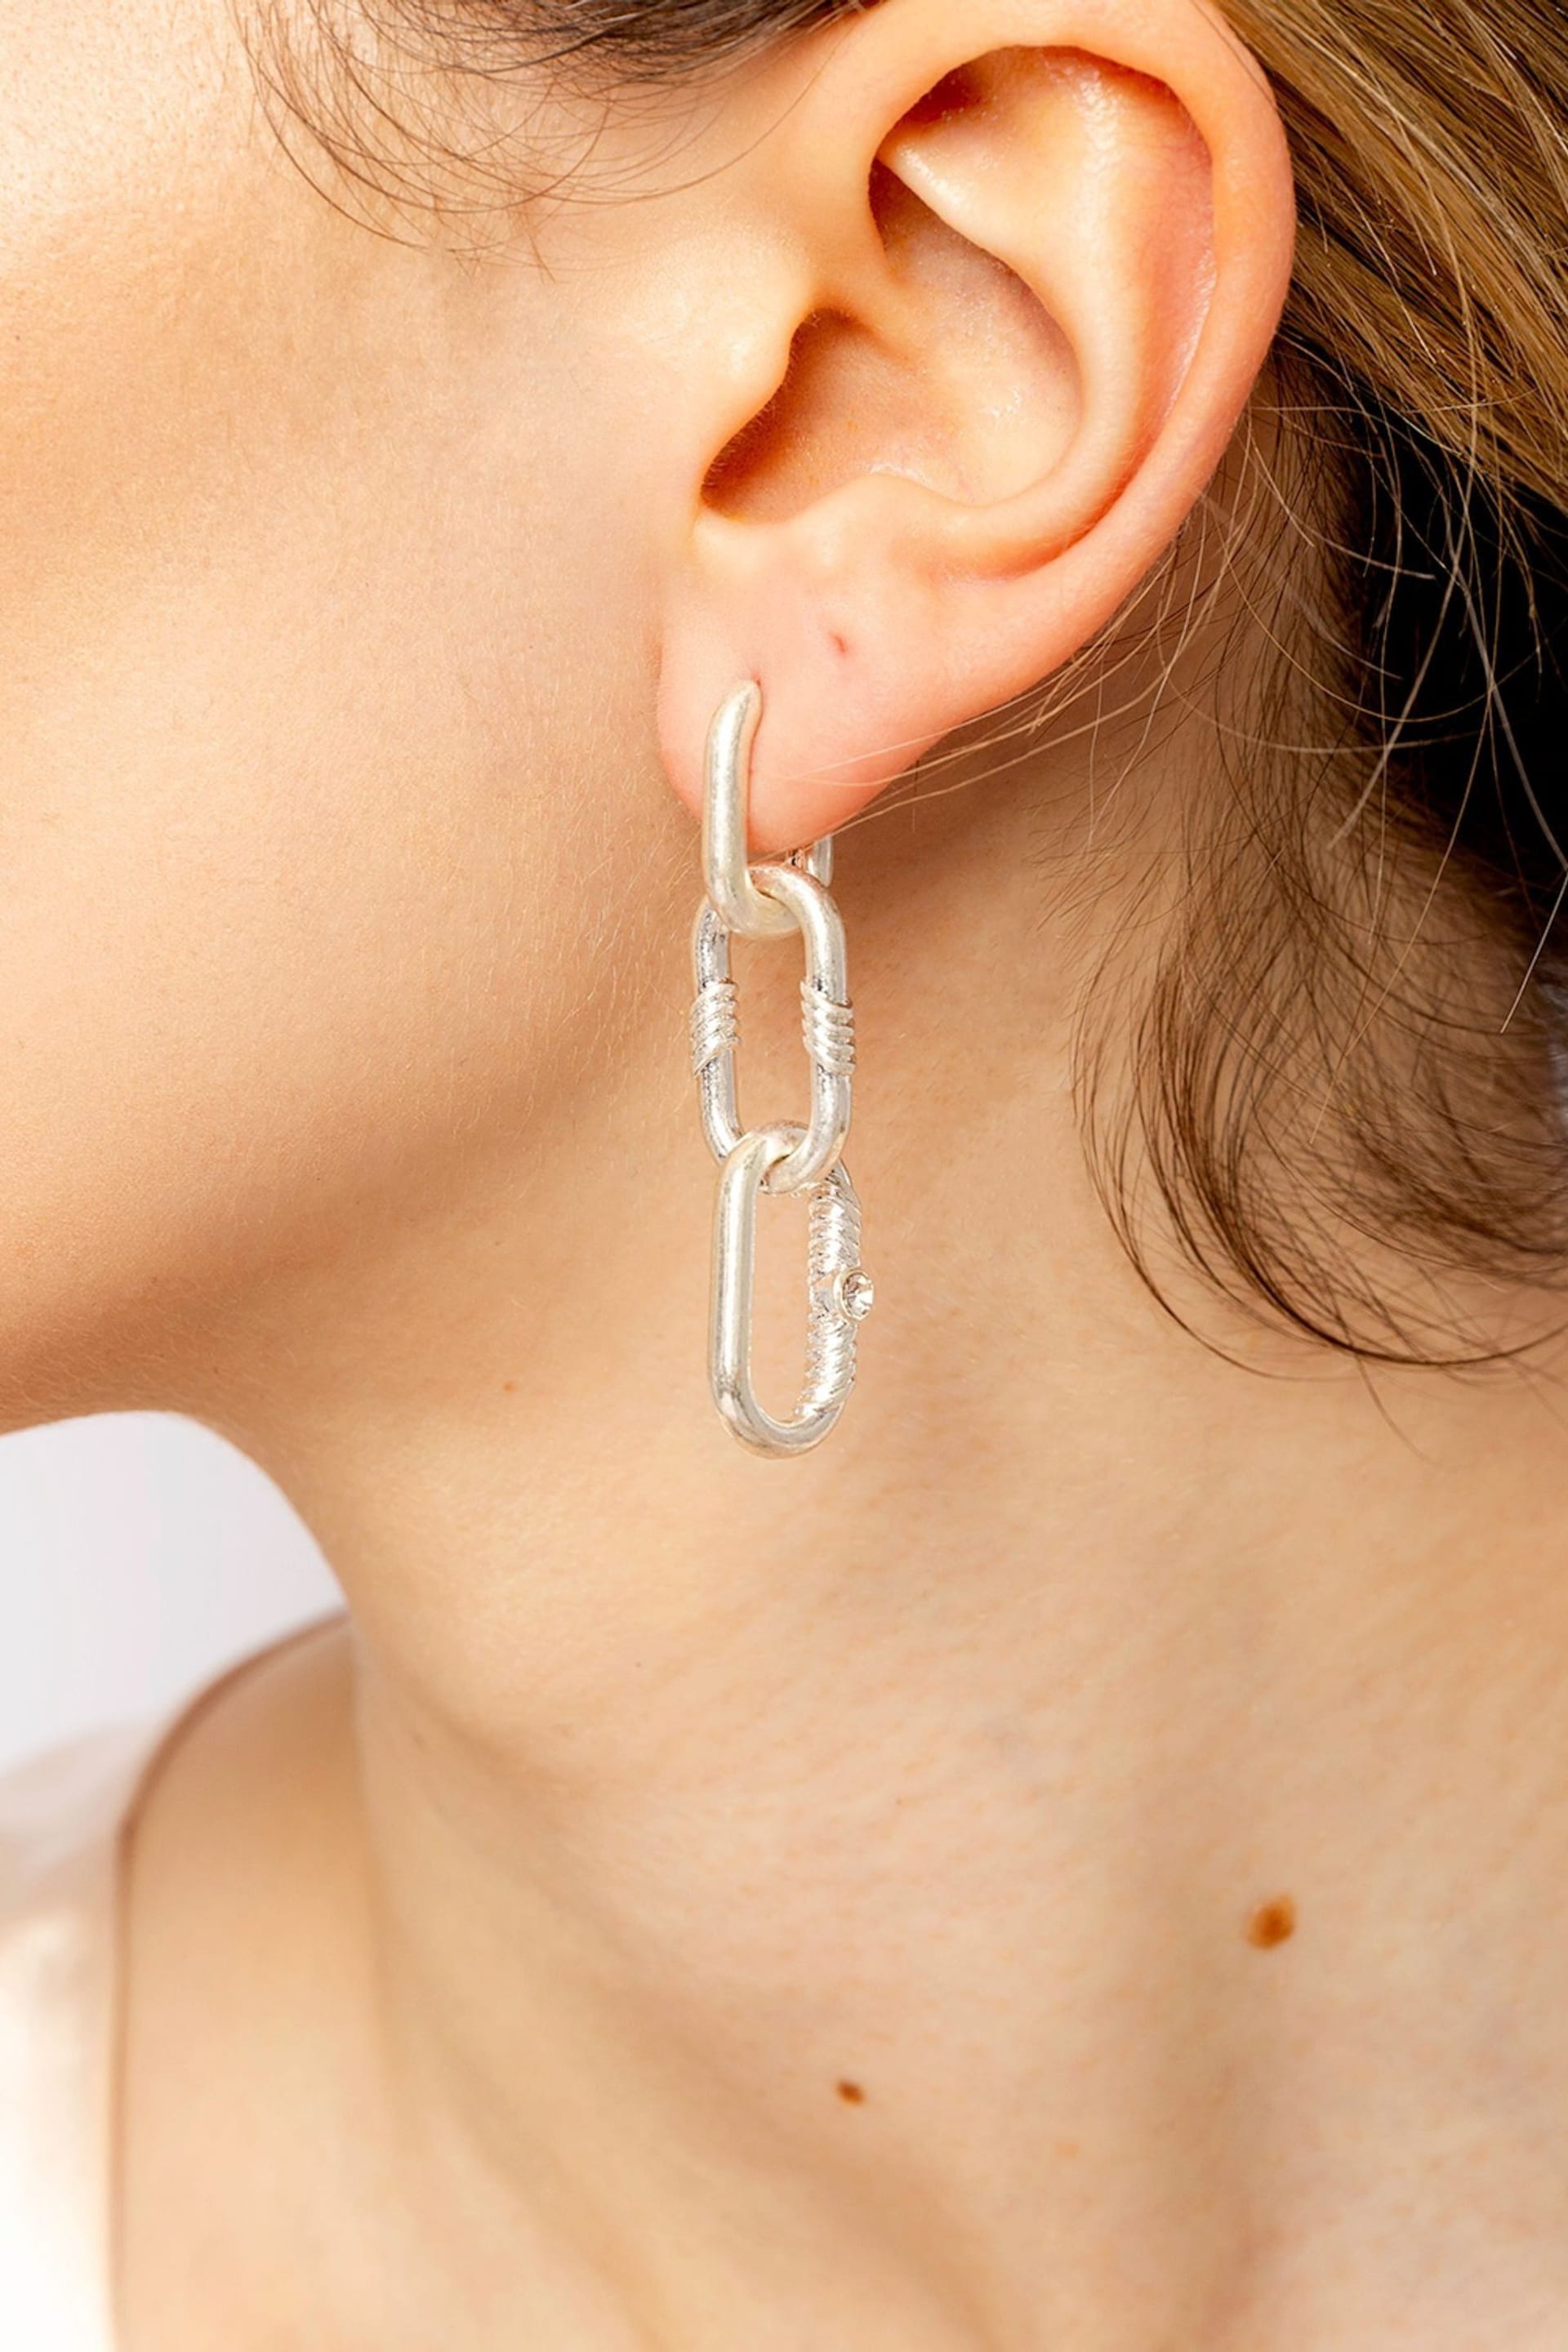 Bibi Bijoux Silver Tone 'Courage' Chunky Chain Earrings - Image 2 of 3